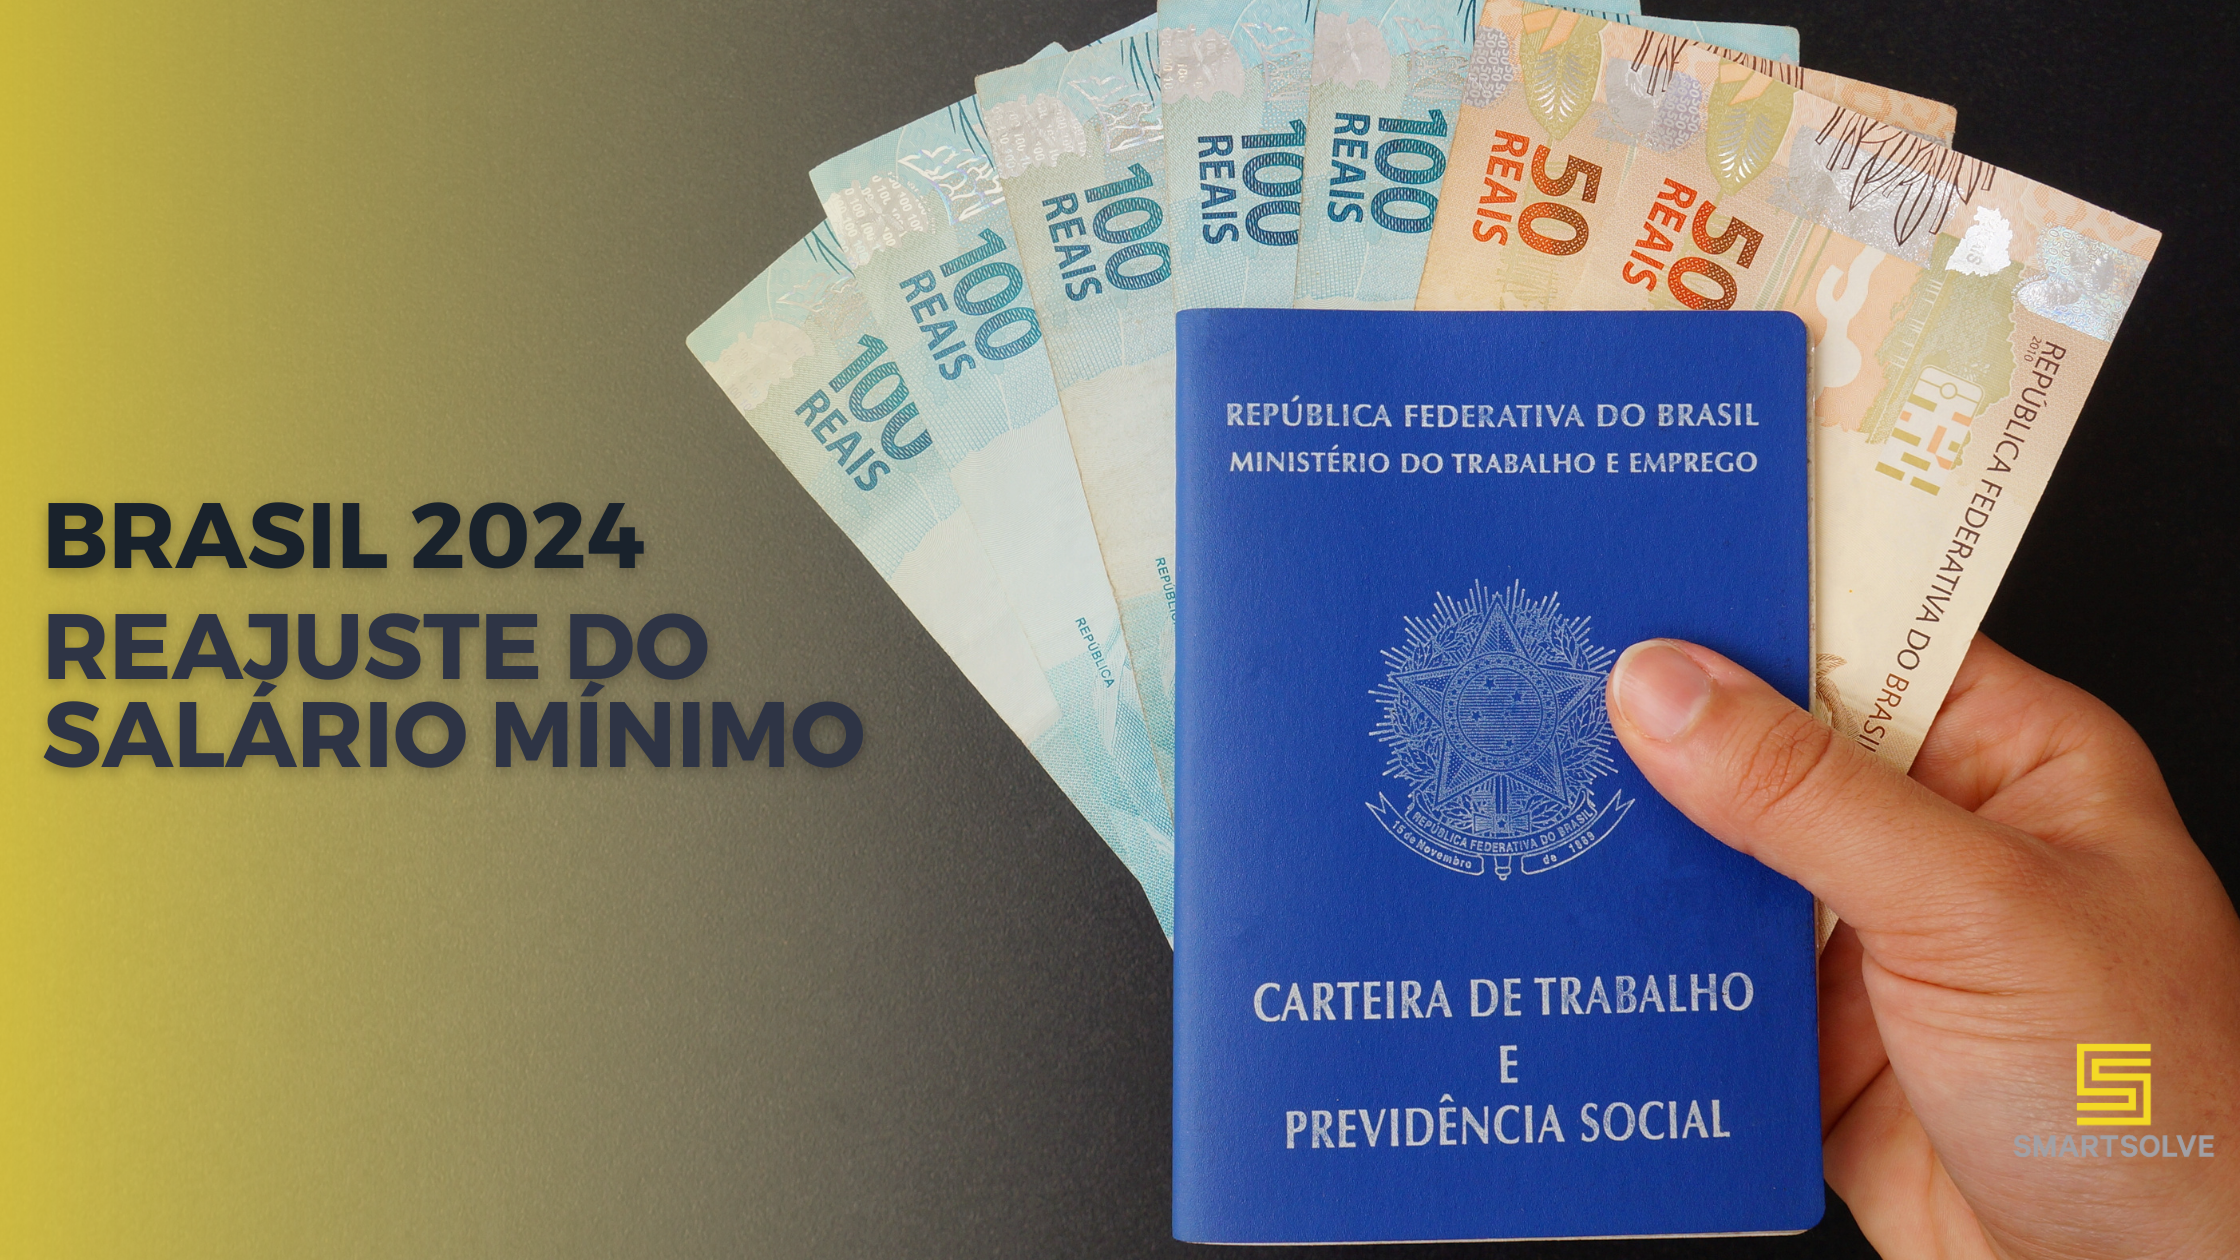 https://smartsolve.com.br/wp-content/uploads/2024/01/Brasil-2024-Reajuste-do-salario-minimo.png